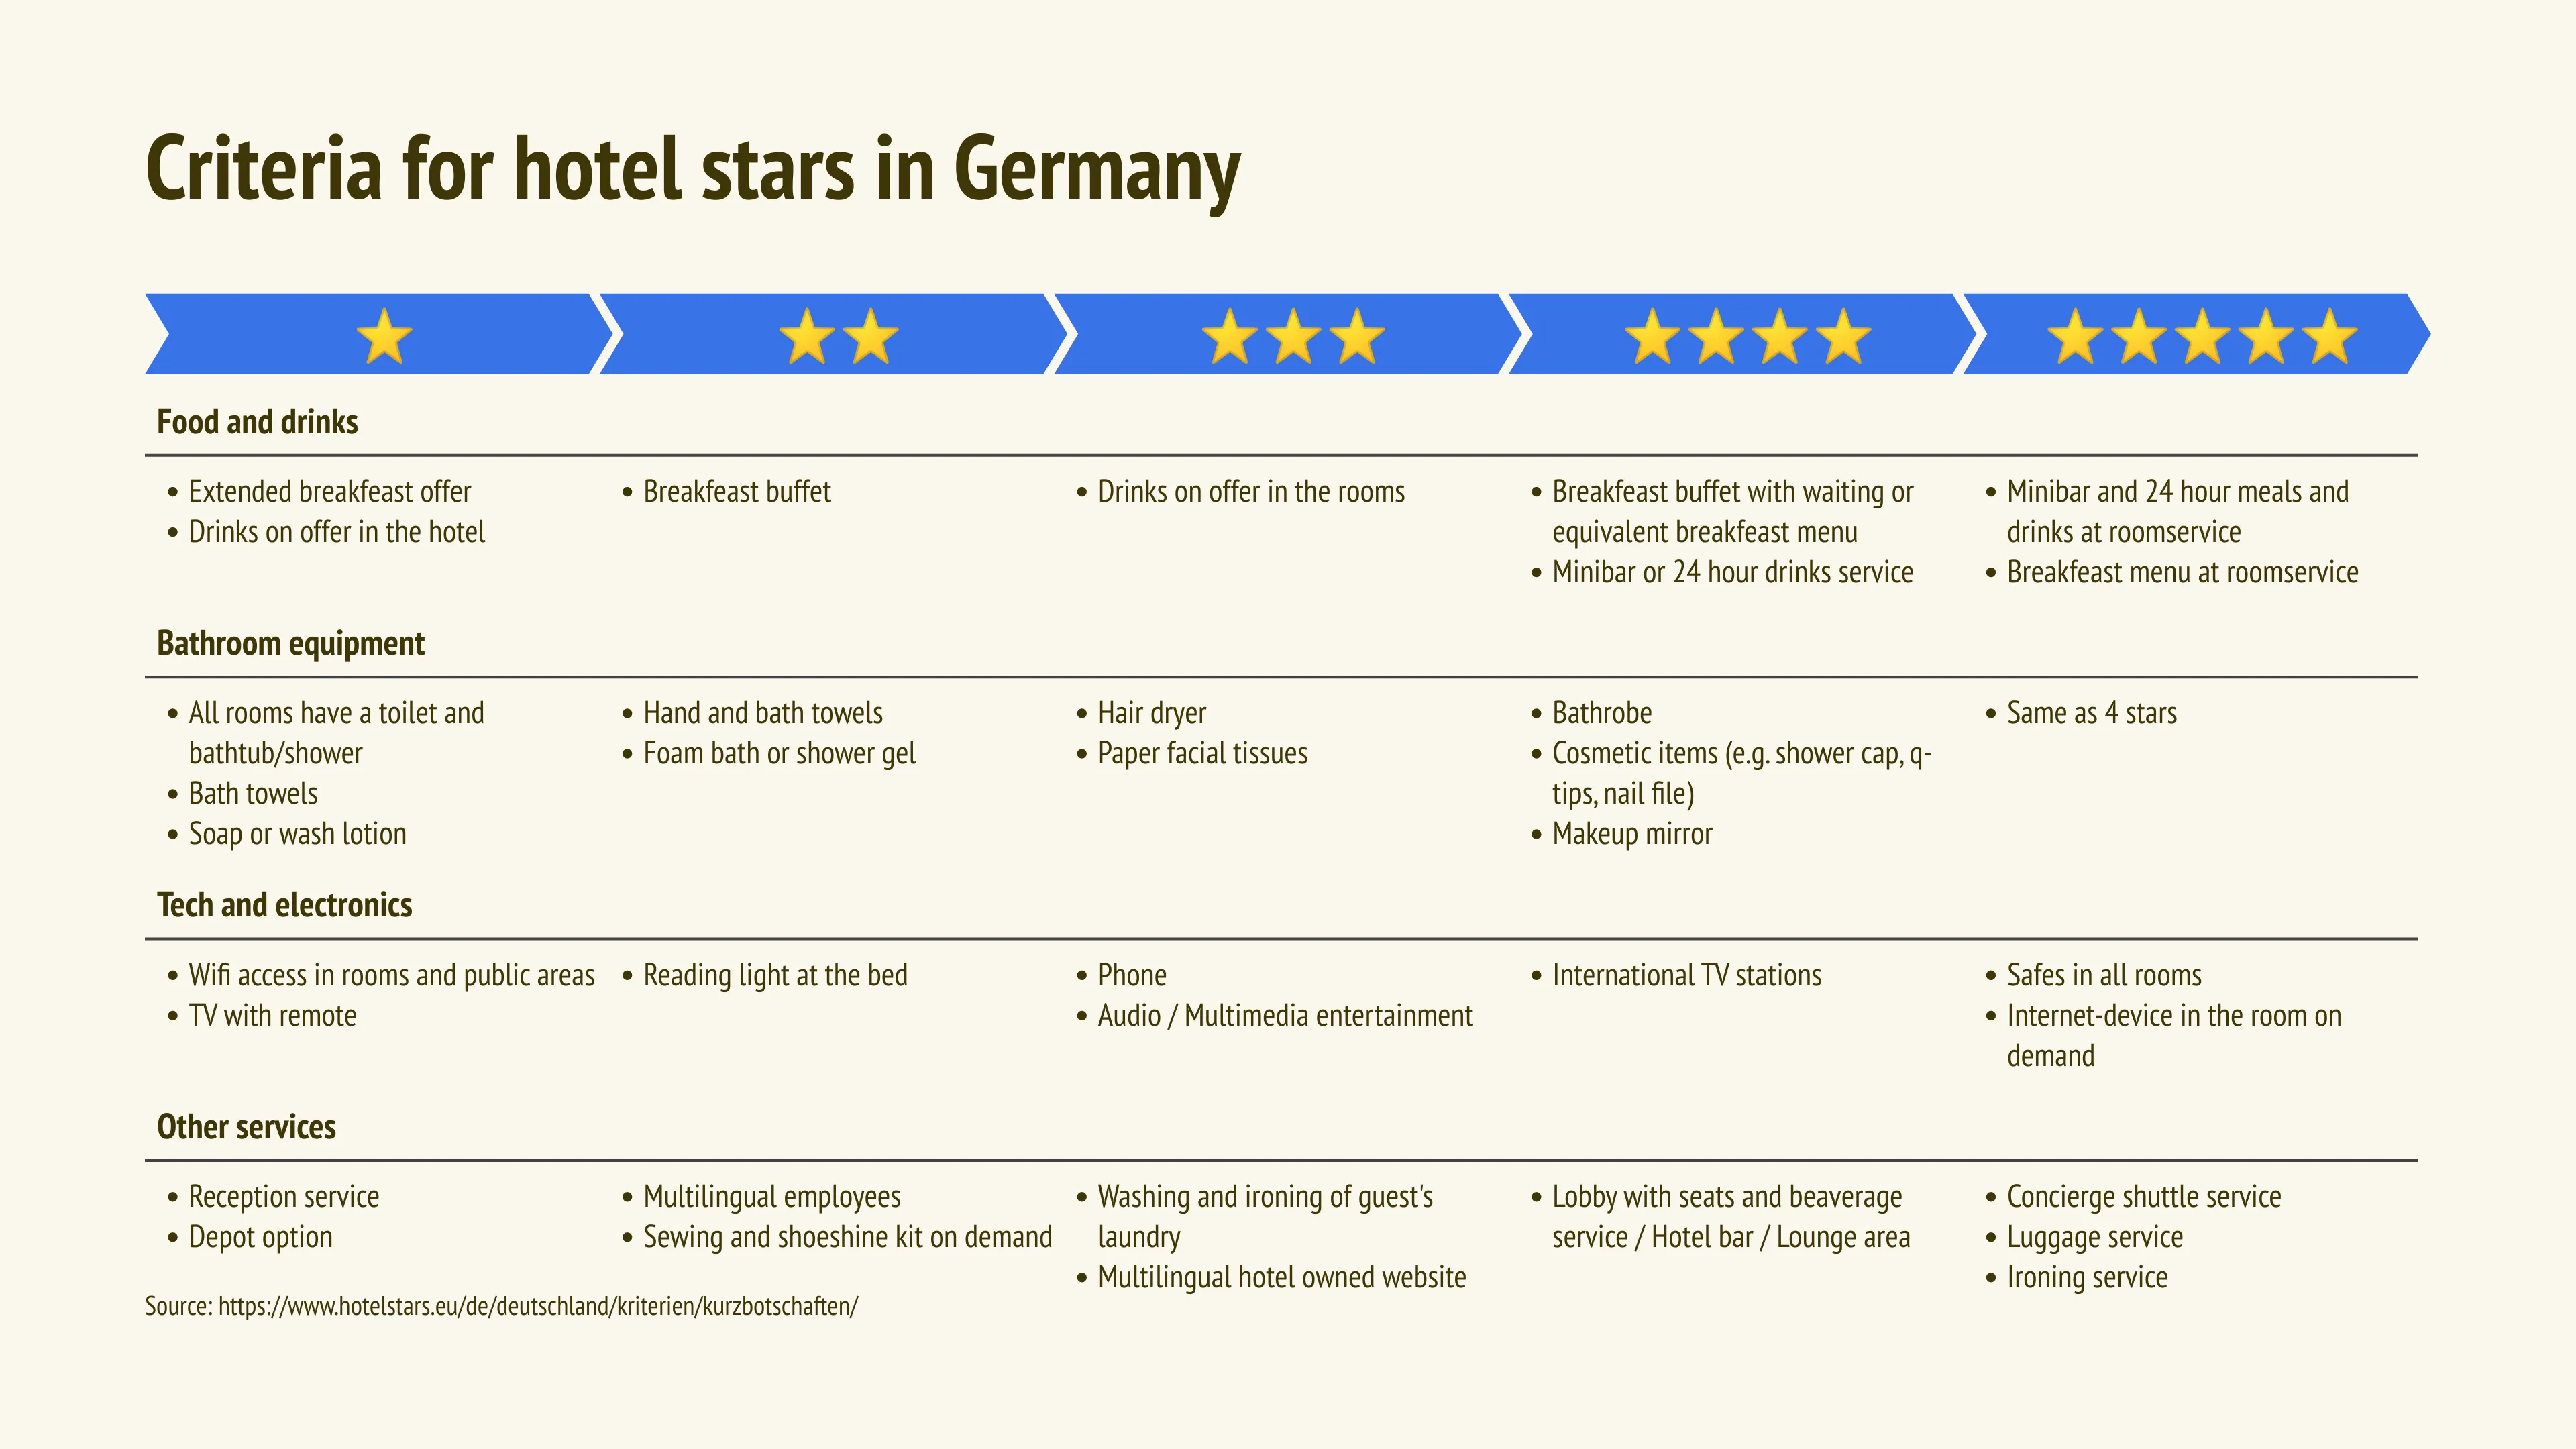 Criteria for hotel stars in Germany